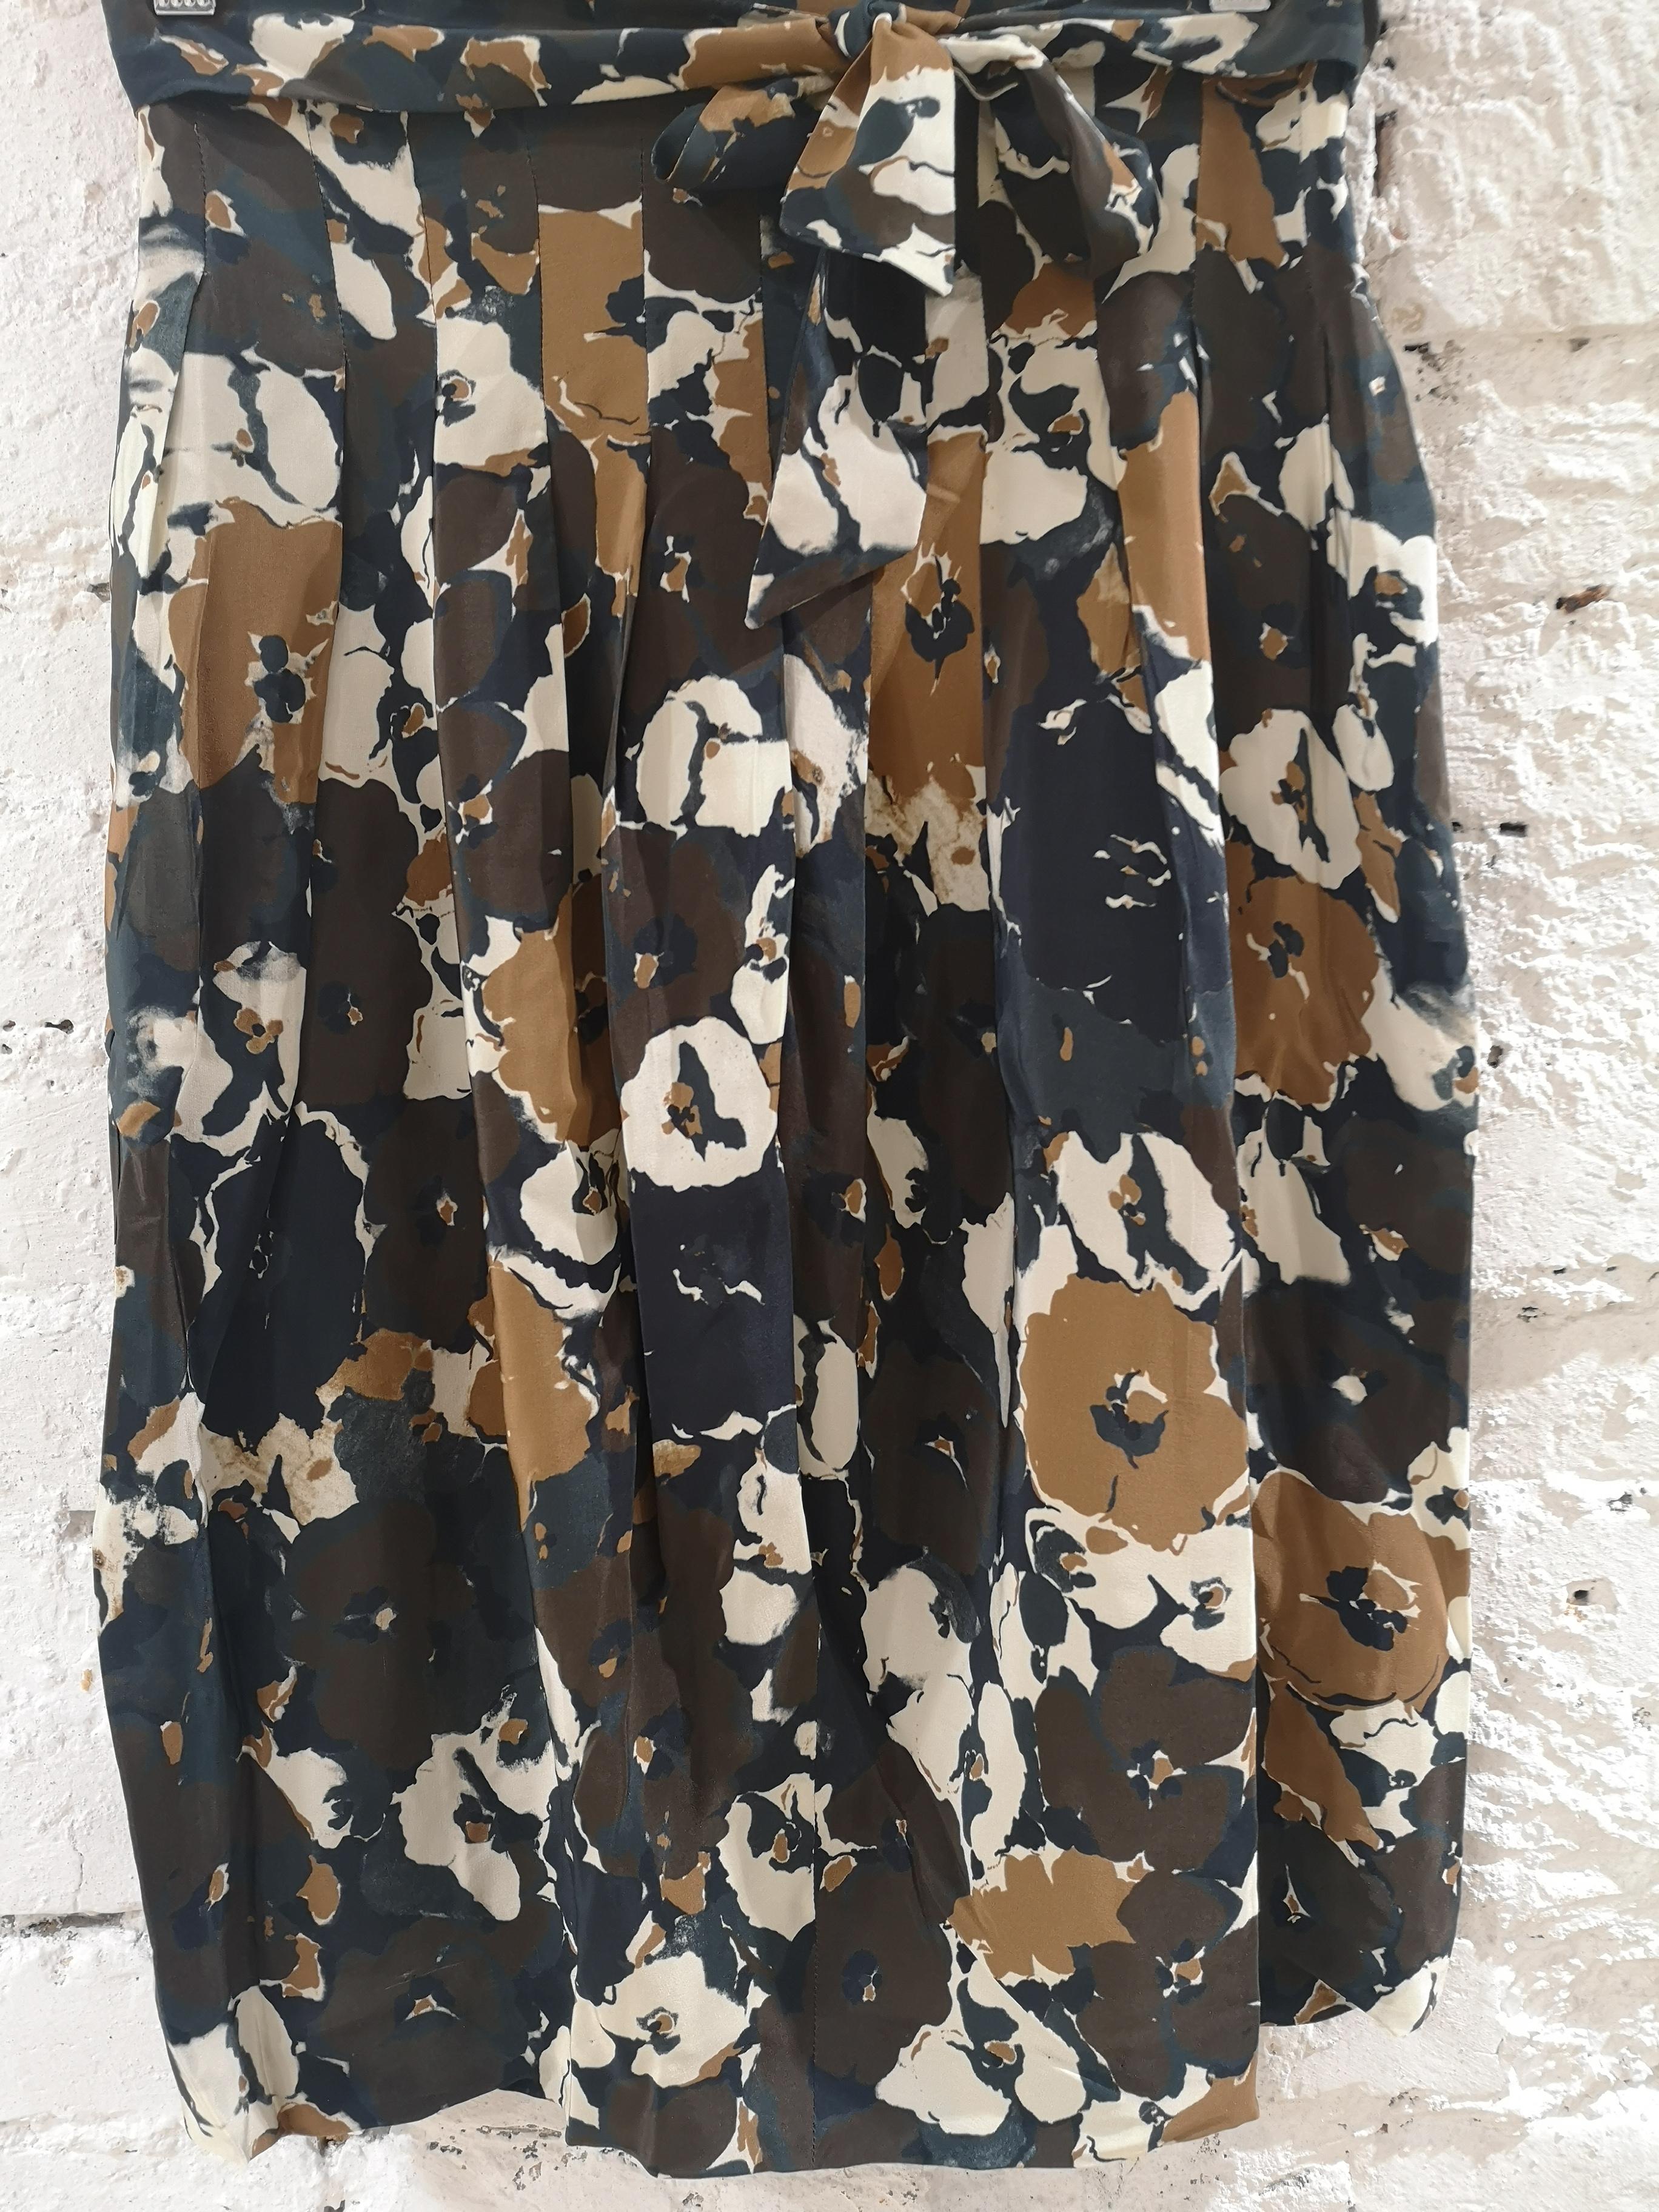 Paul Smith flower skirt
Paul Smith multicoloured skirt 
made in poland
size M 
waist 70 cm
total lenght 62 cm